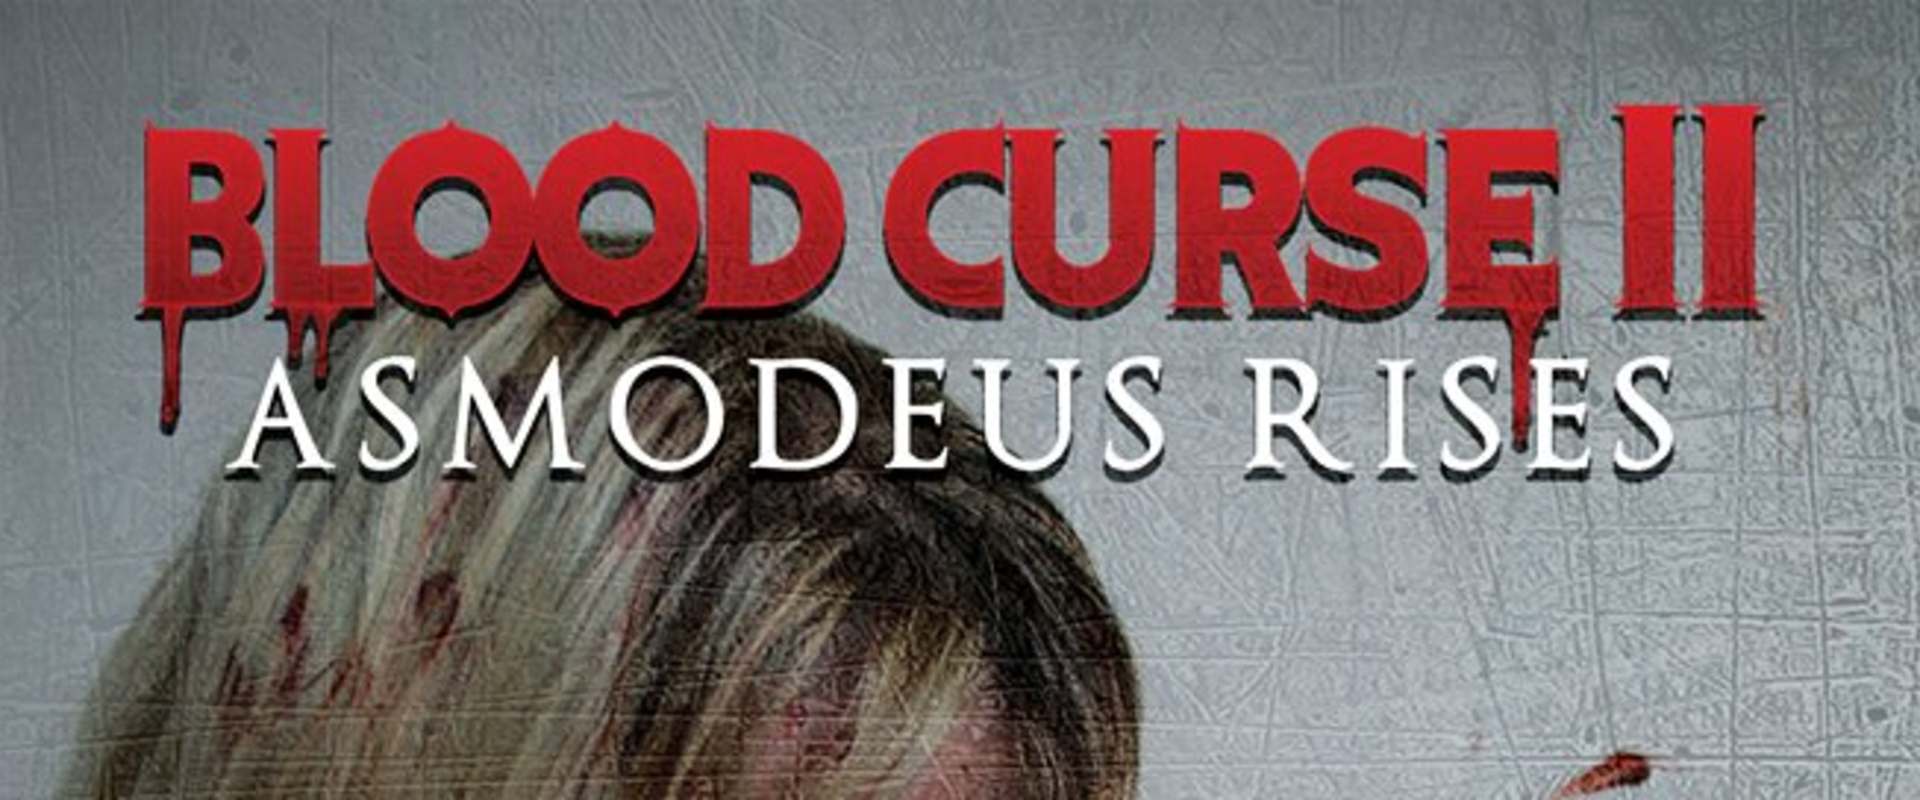 Blood Curse II: Asmodeus Rises background 2